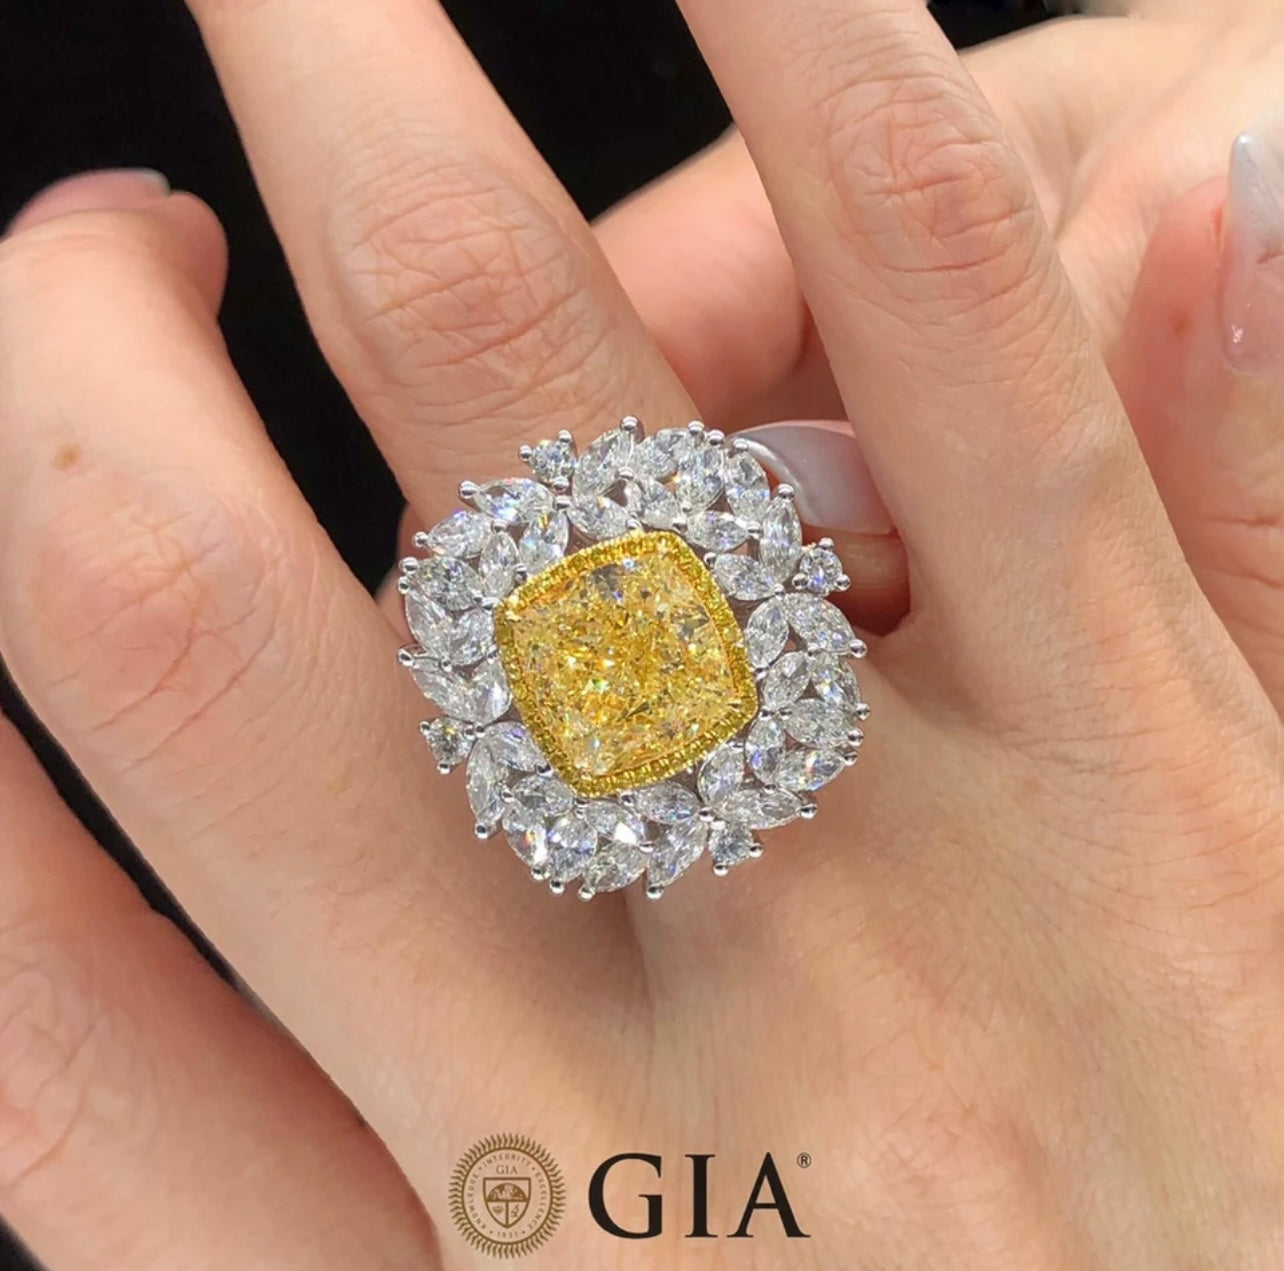 GIA Certified Argyle Diamond 6.00 Carats Fancy Vivid Yellow Brilliant Cushion Cut Diamond Ring Very Beautiful.